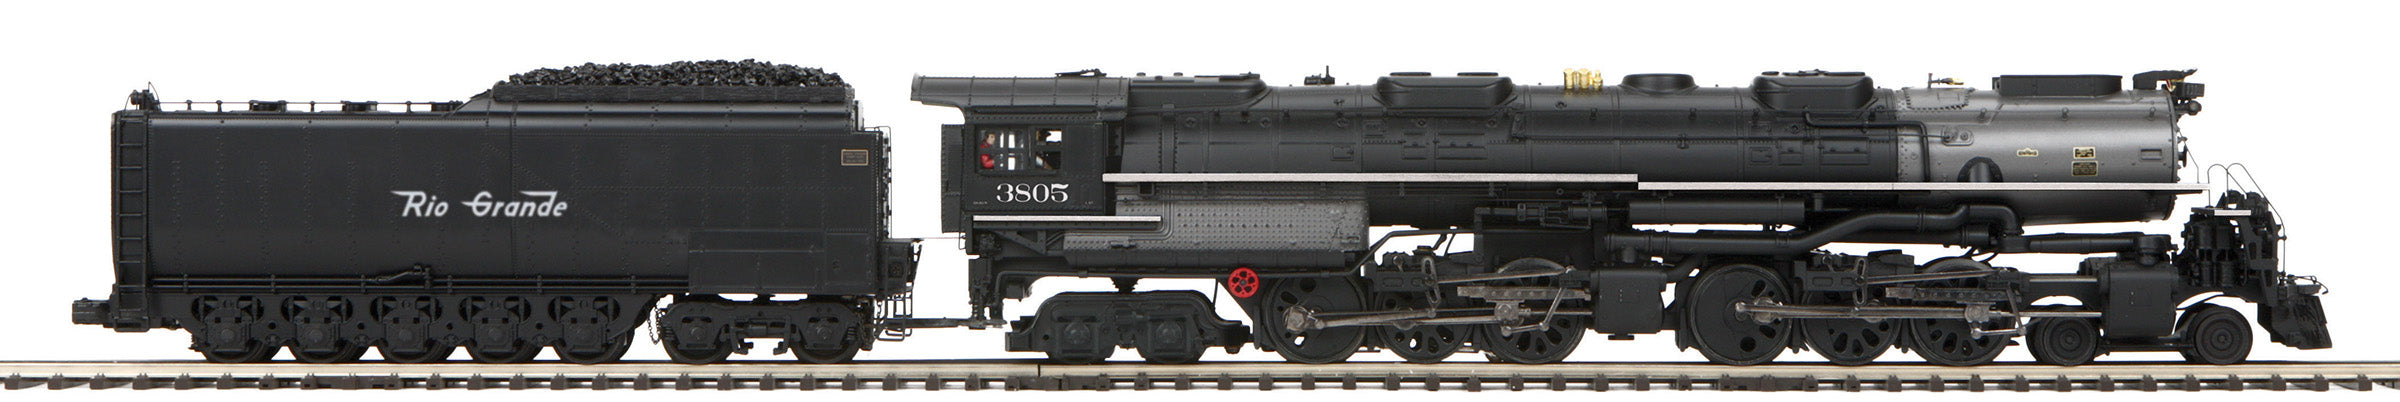 MTH 20-3891-1 - 4-6-6-4 Challenger Steam Engine "Denver & Rio Grande" #3805 (Coal Tender)